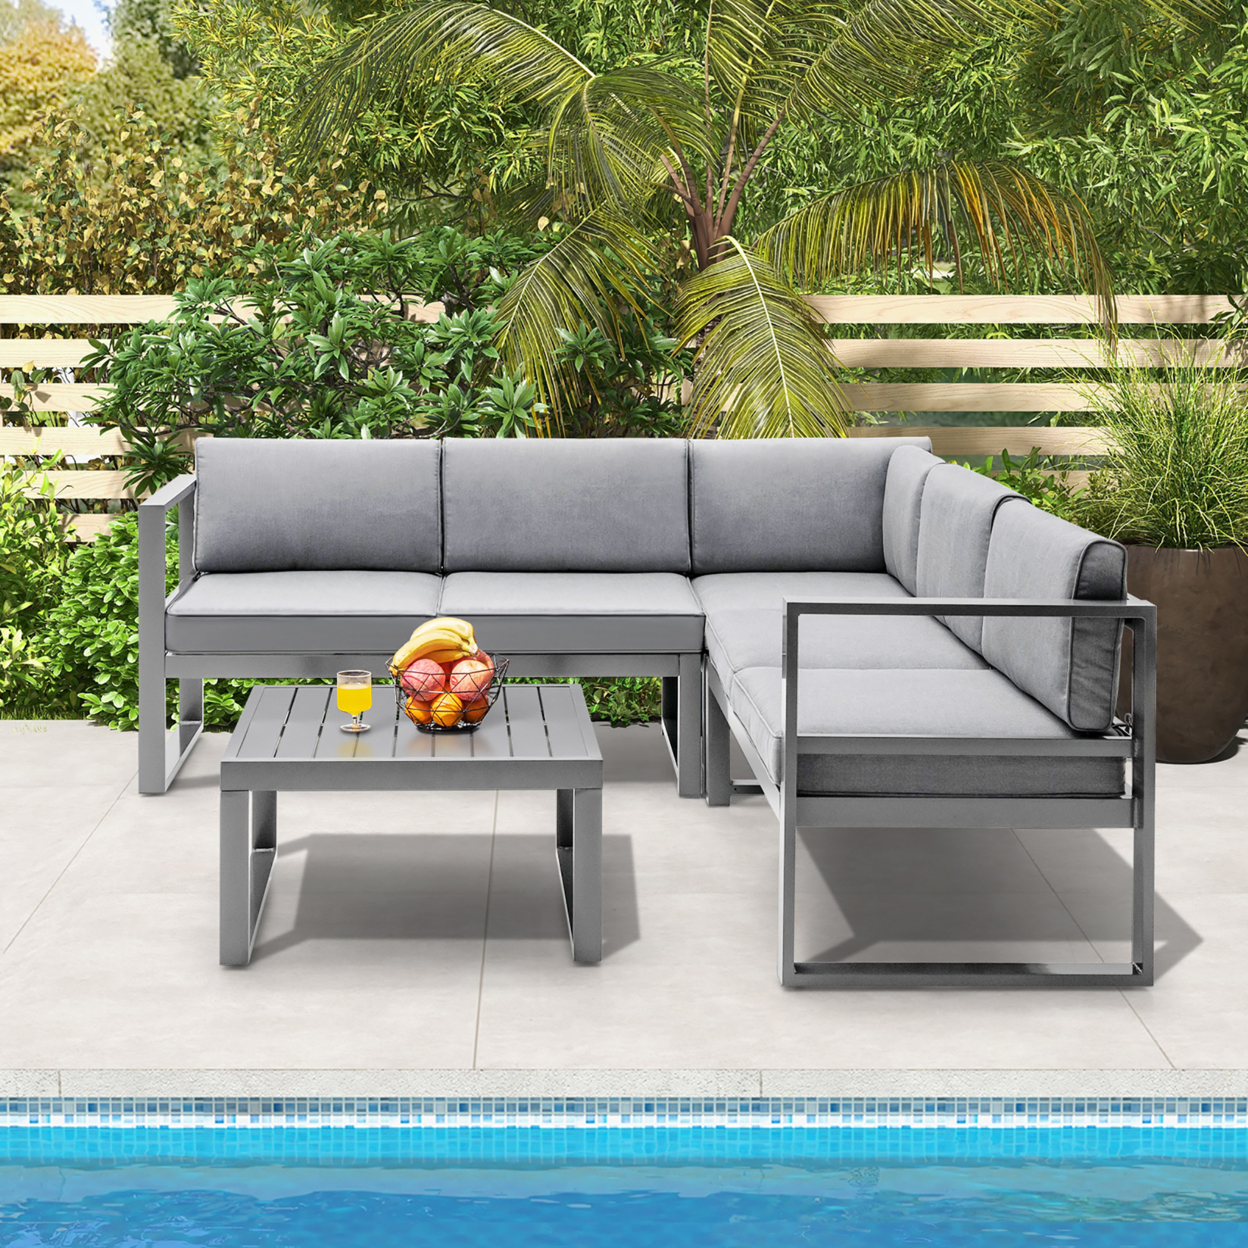 4PCS Aluminum Outdoor Conversation Set Patio Furniture Set W/ Coffee Table & Cushions Gray